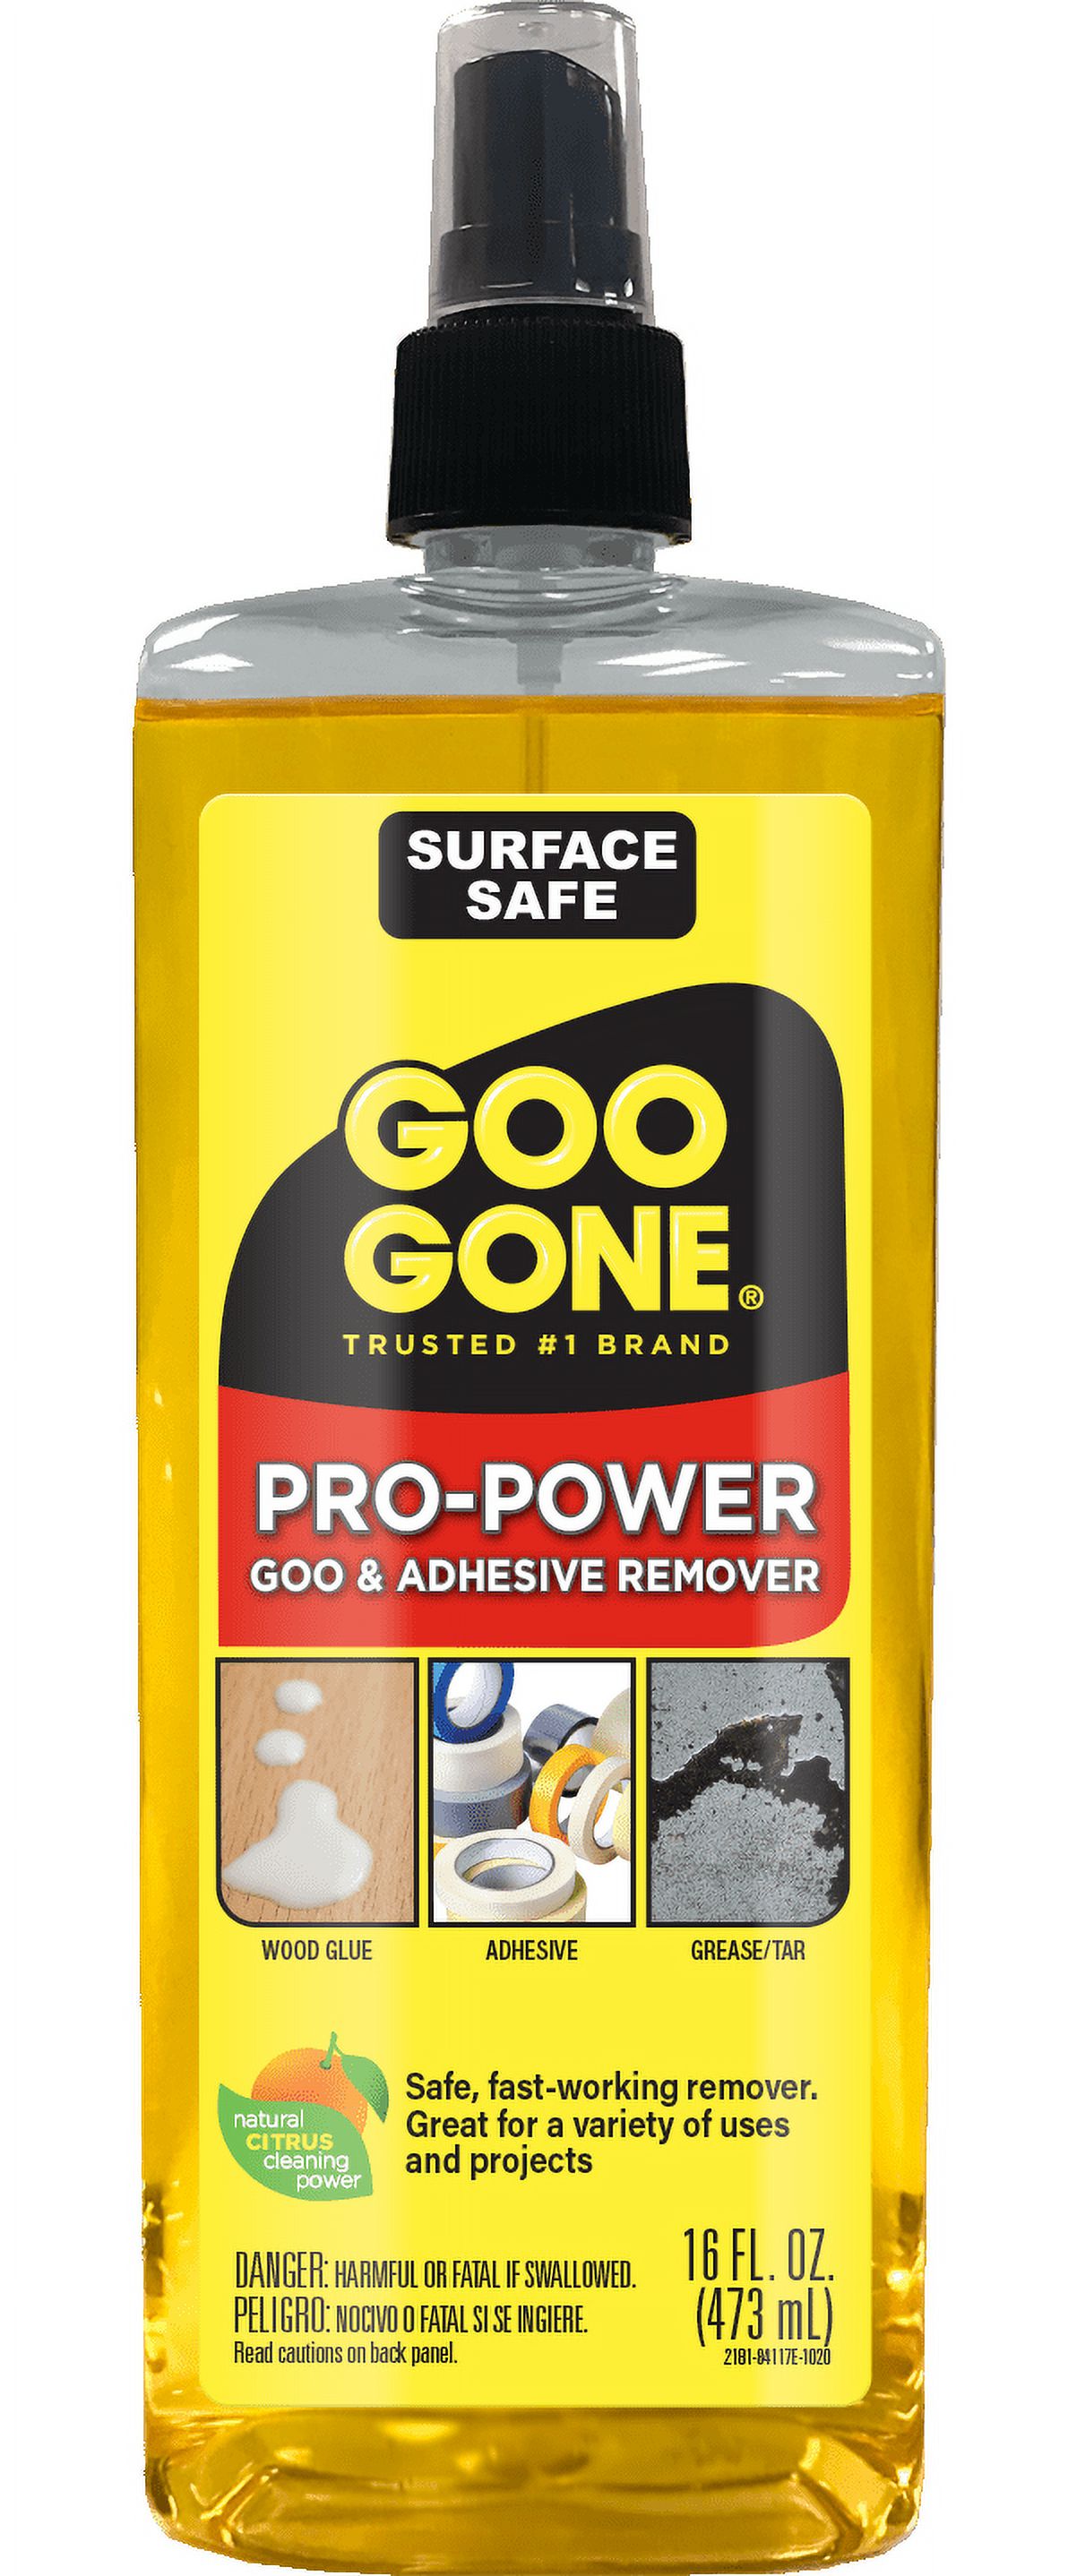 Goo Gone Pro-Power Adhesive, Grease & Tar Remover Spray, Orange Citrus Scent, 16 oz - image 1 of 7